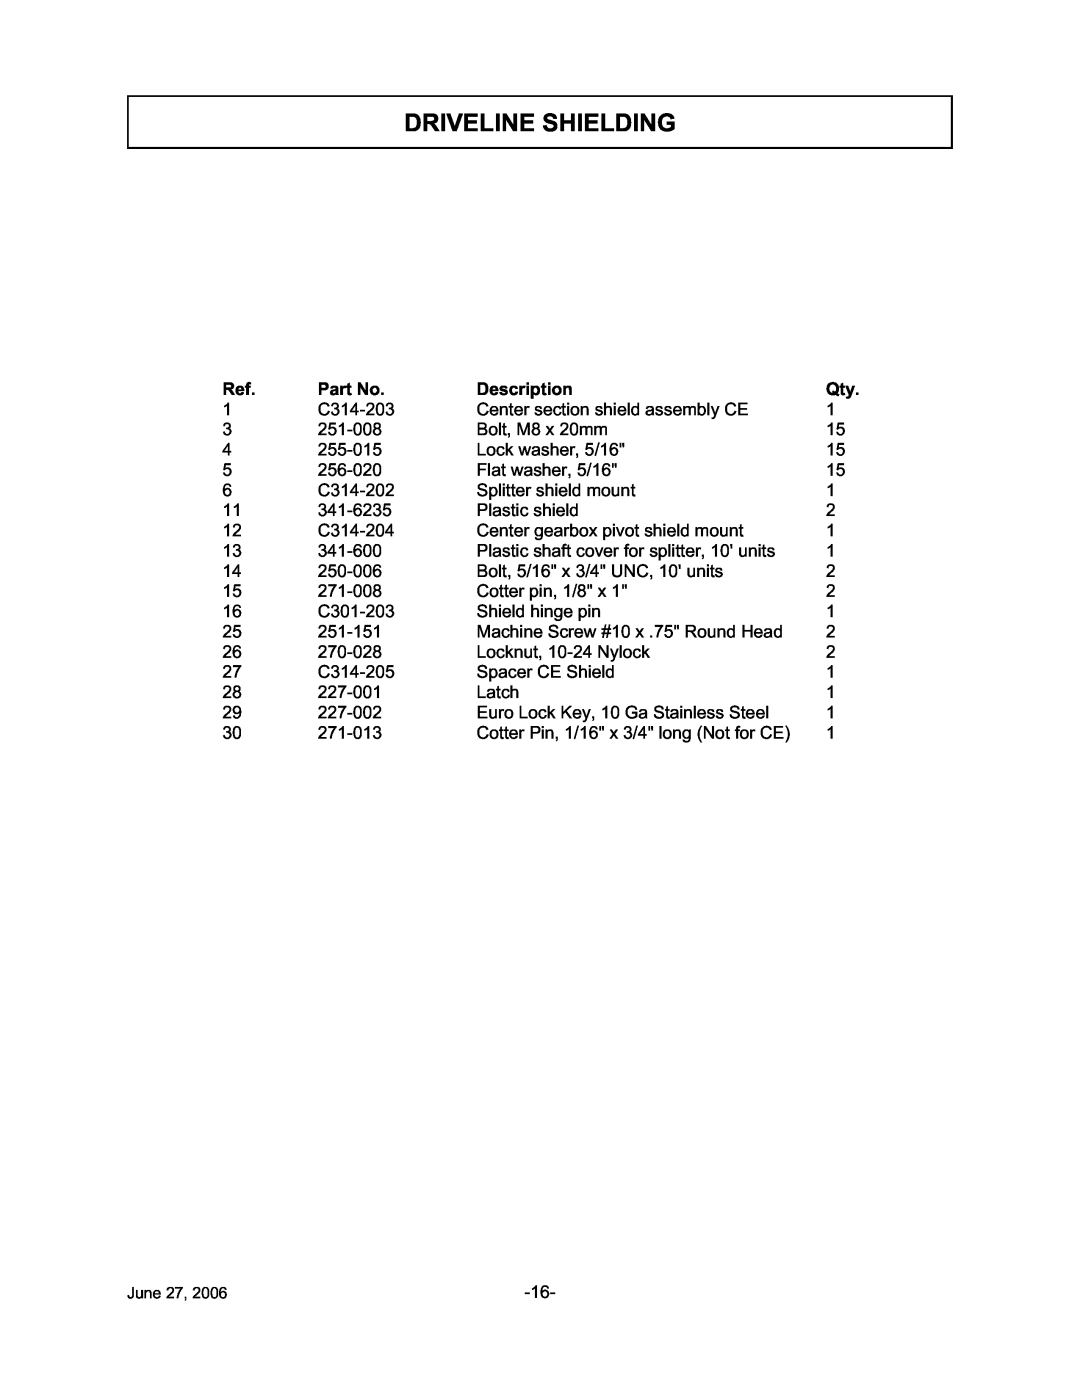 Tiger TWR-180, TWR-120 manual Driveline Shielding, Description, C314-203 